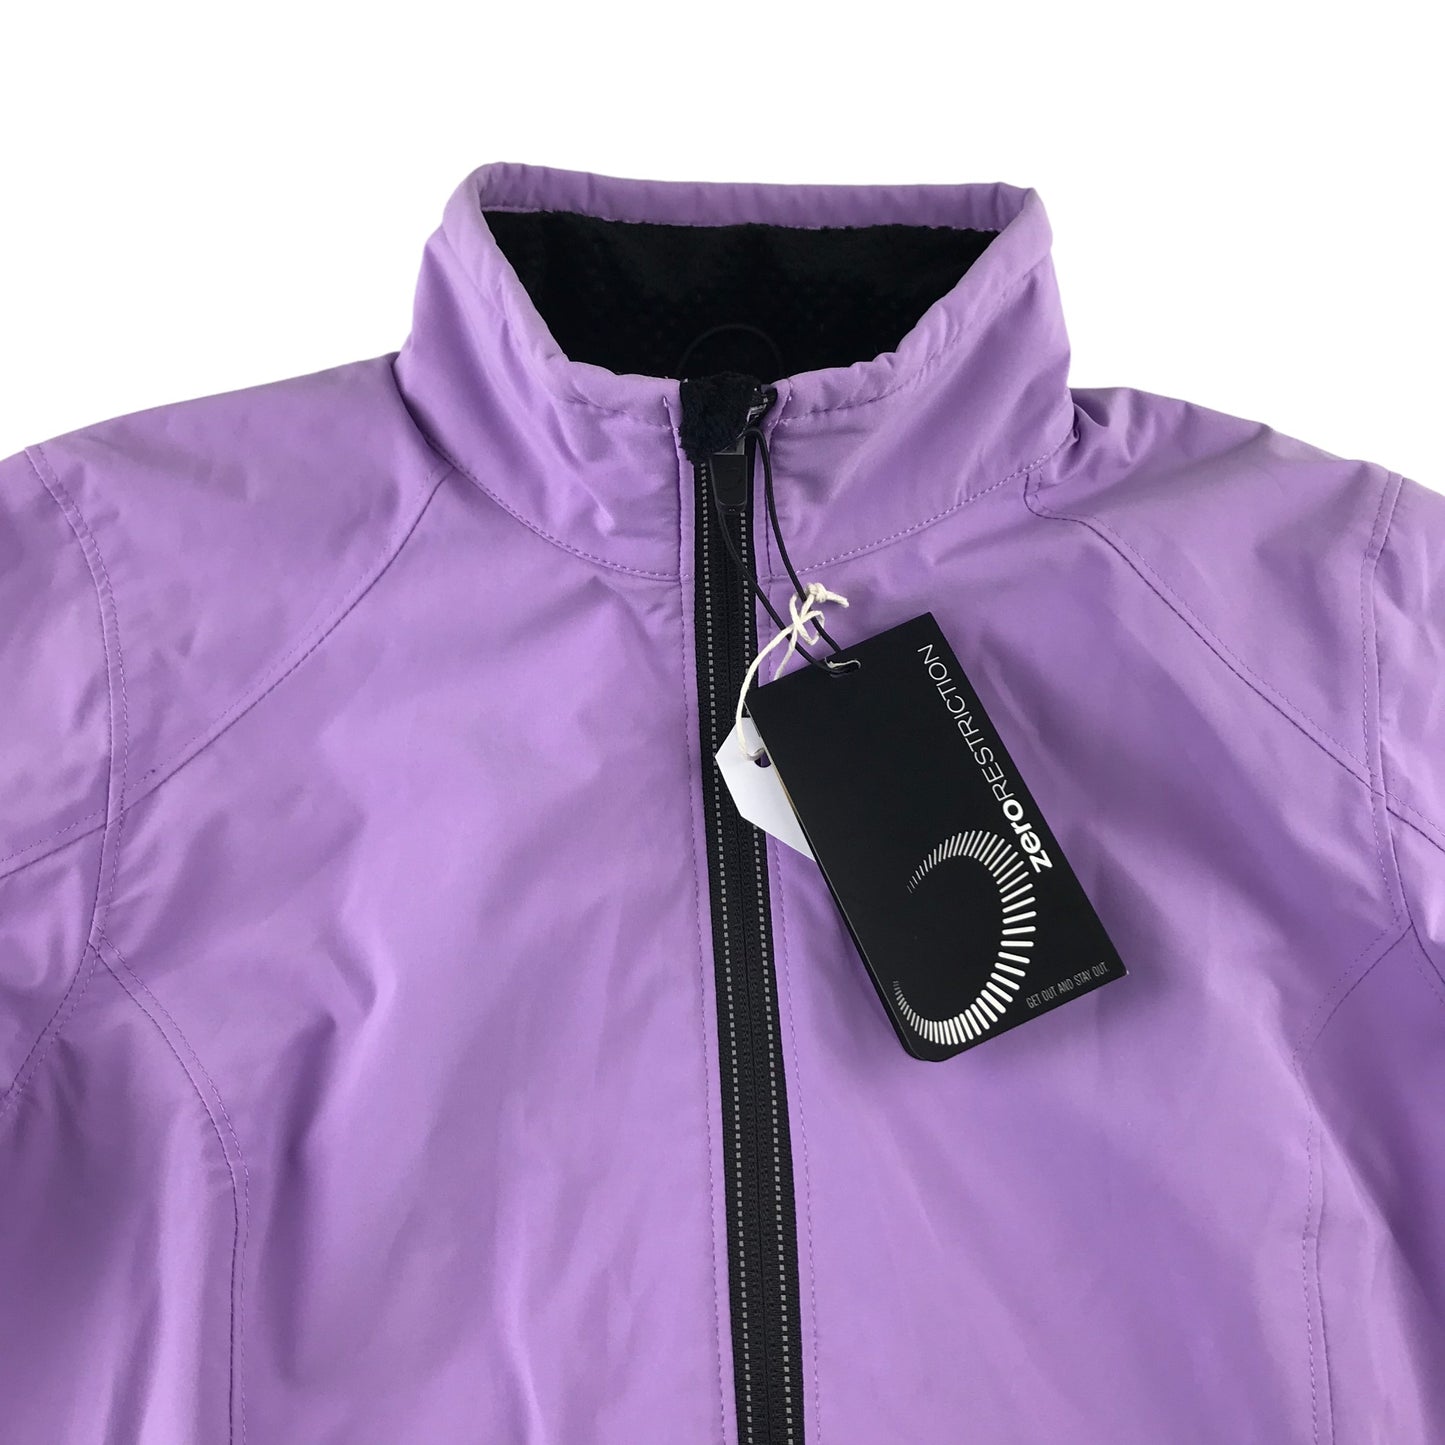 Zero Restriction light jacket women's size small lilac golf brand